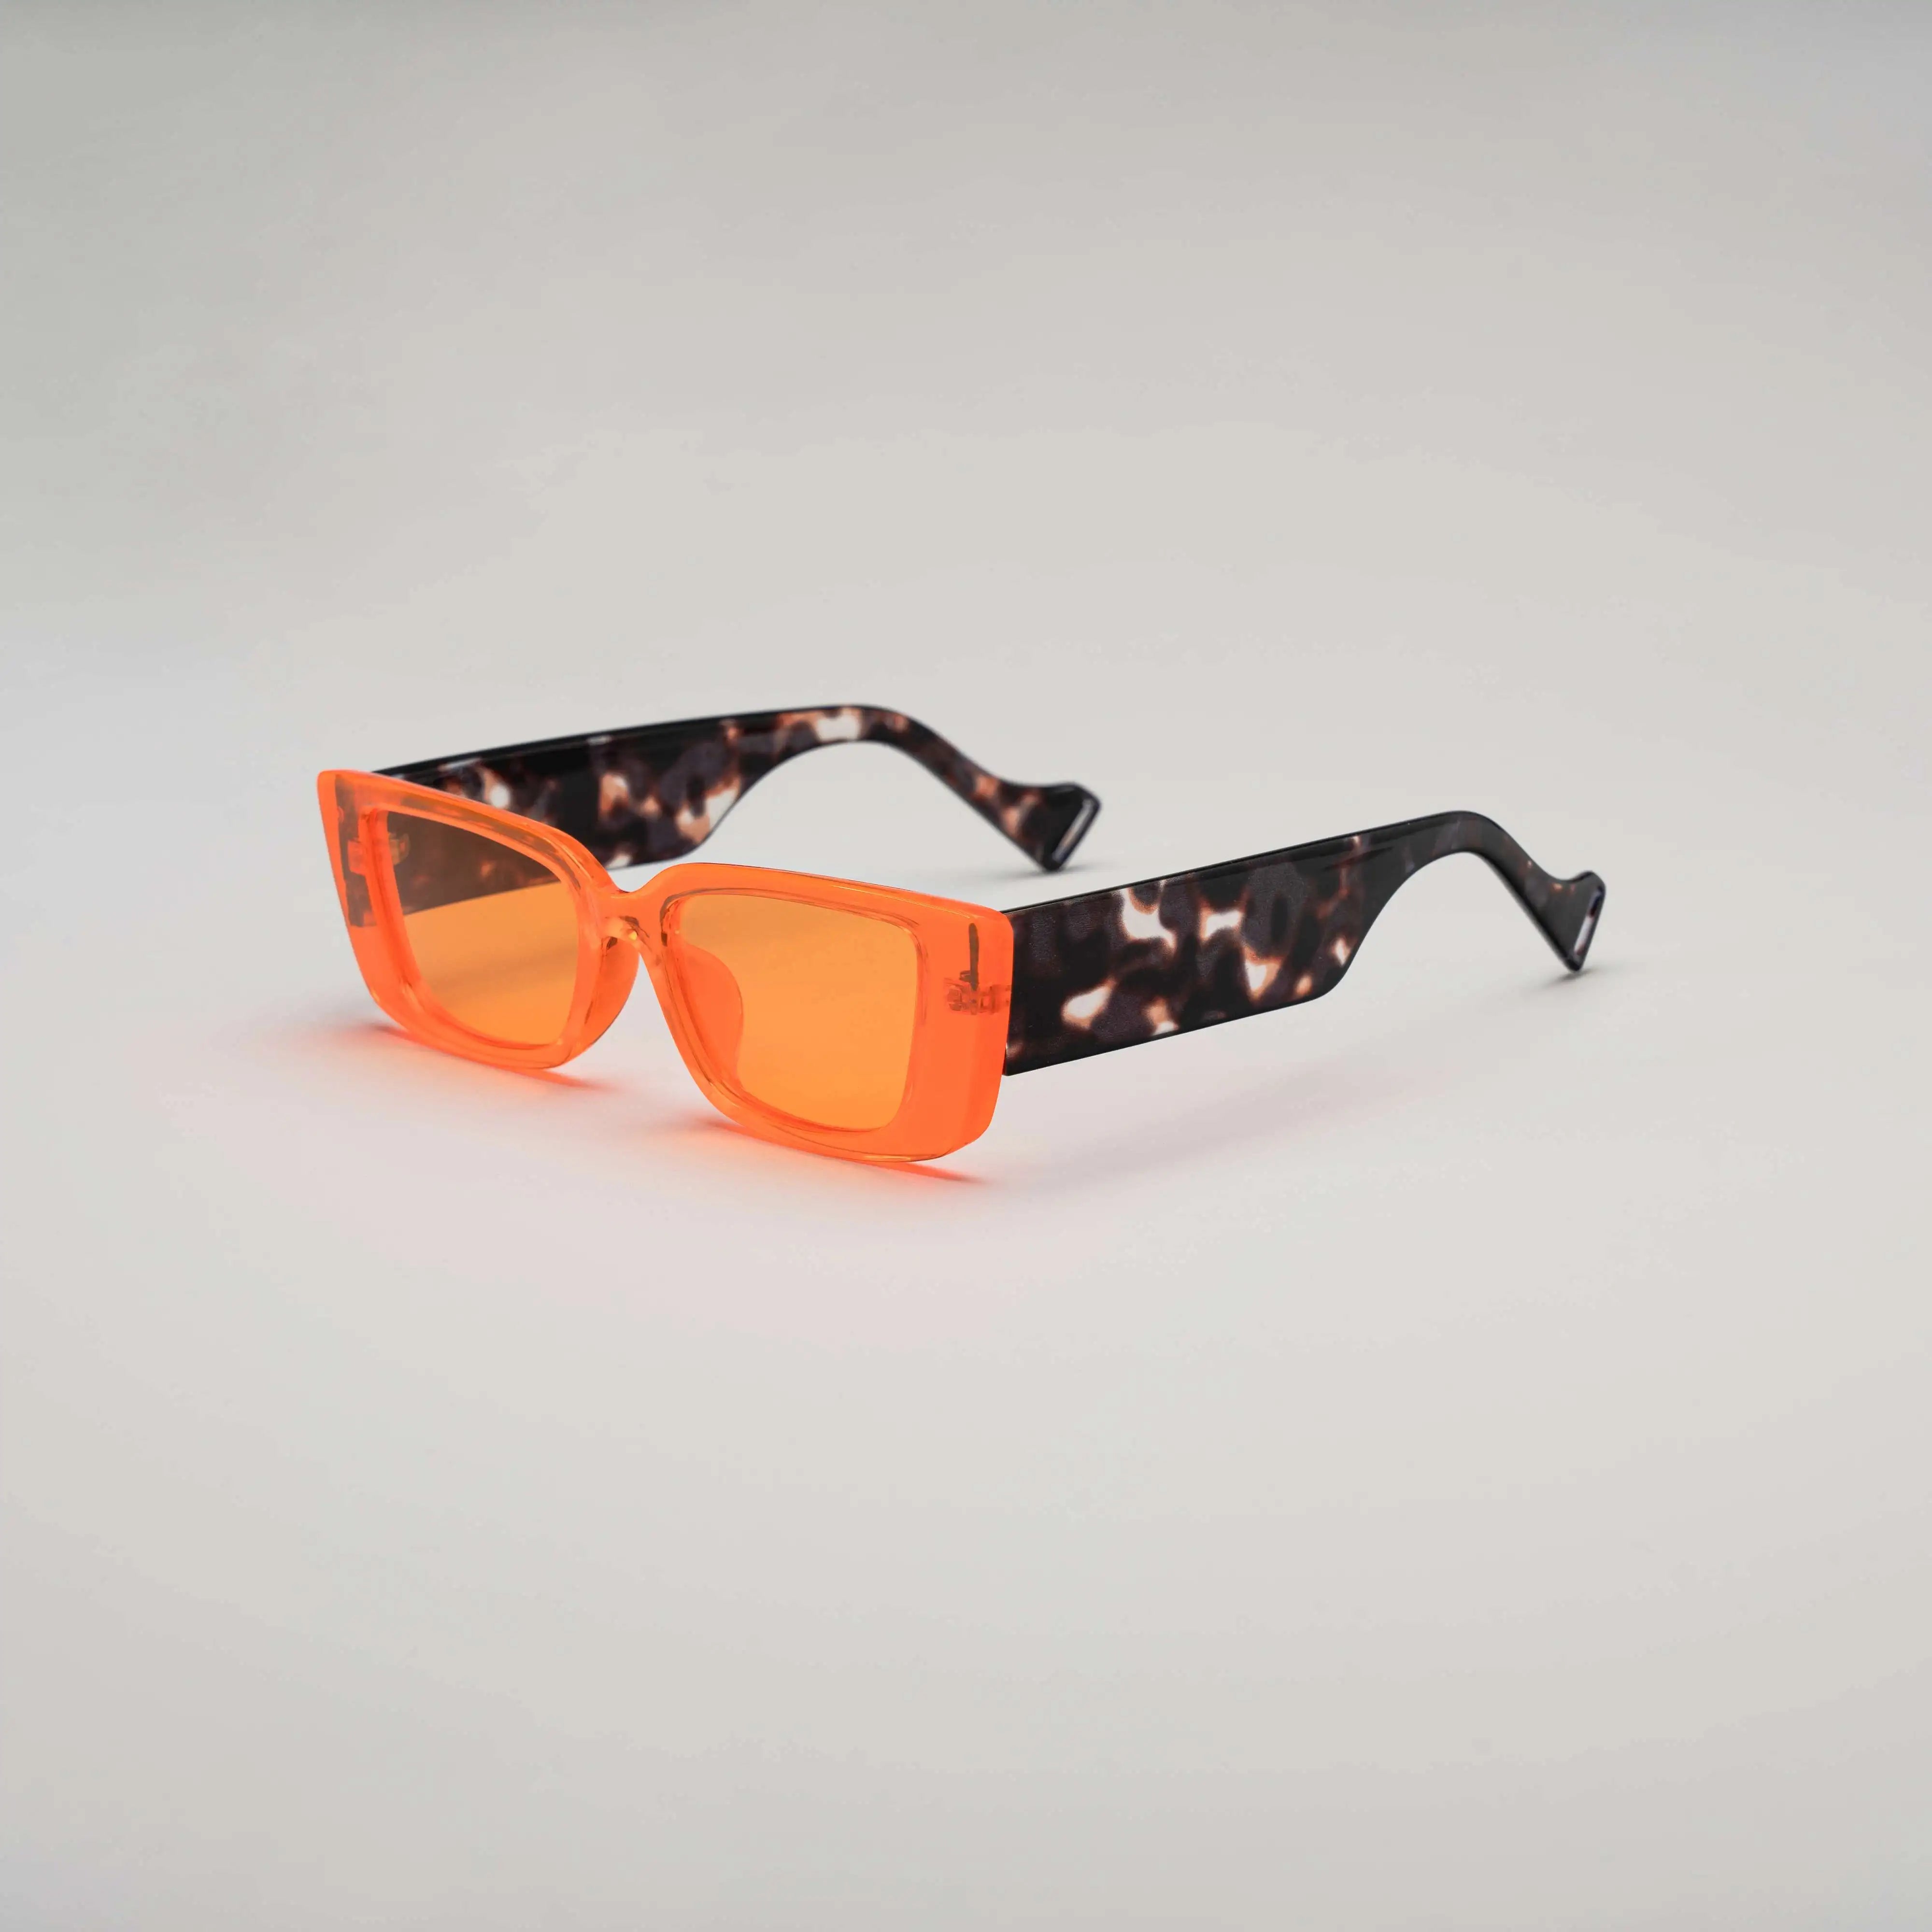 'Disco Inferno' Retro Sunglasses in Orange & Tortoiseshell